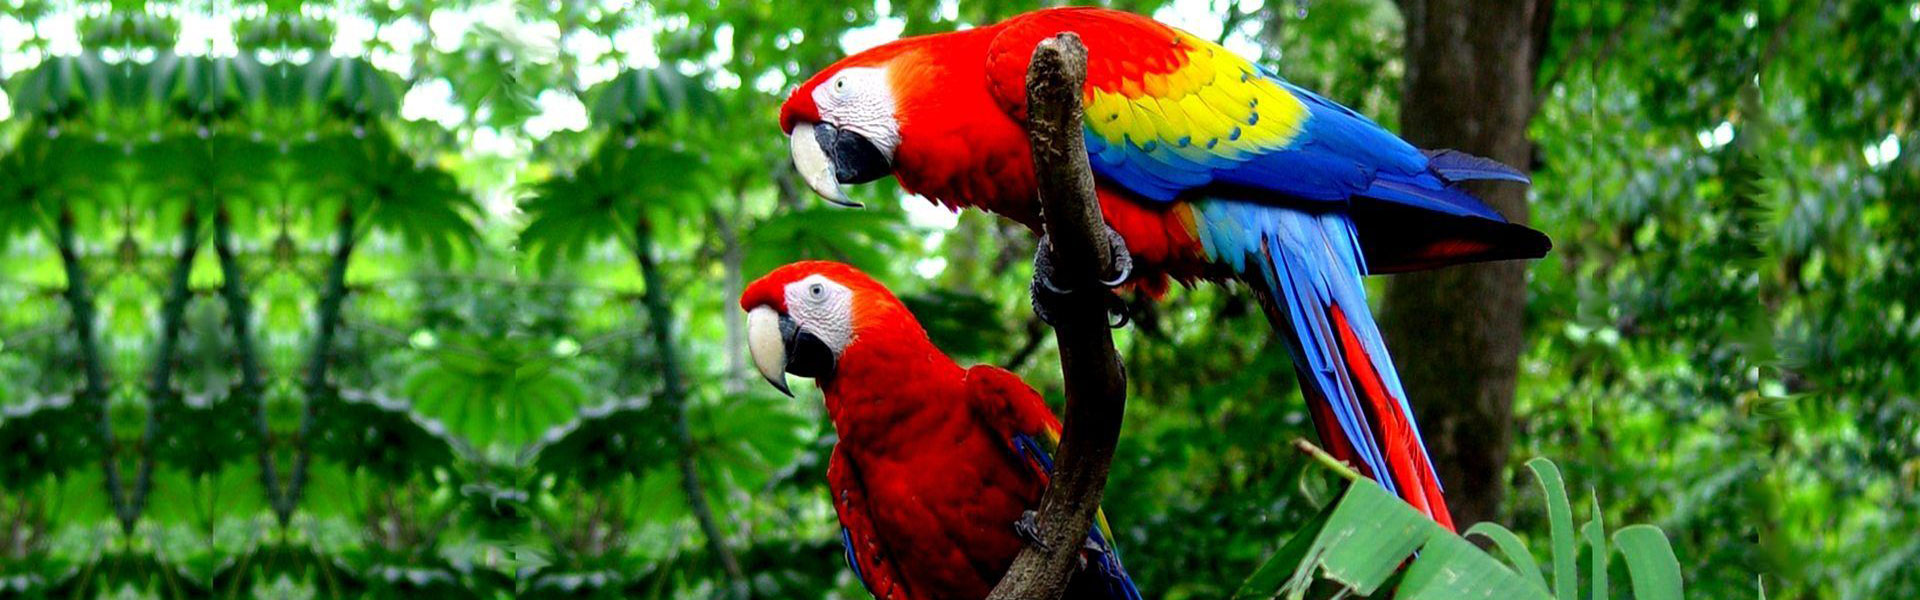 Macaws-in-kolkata.jpg